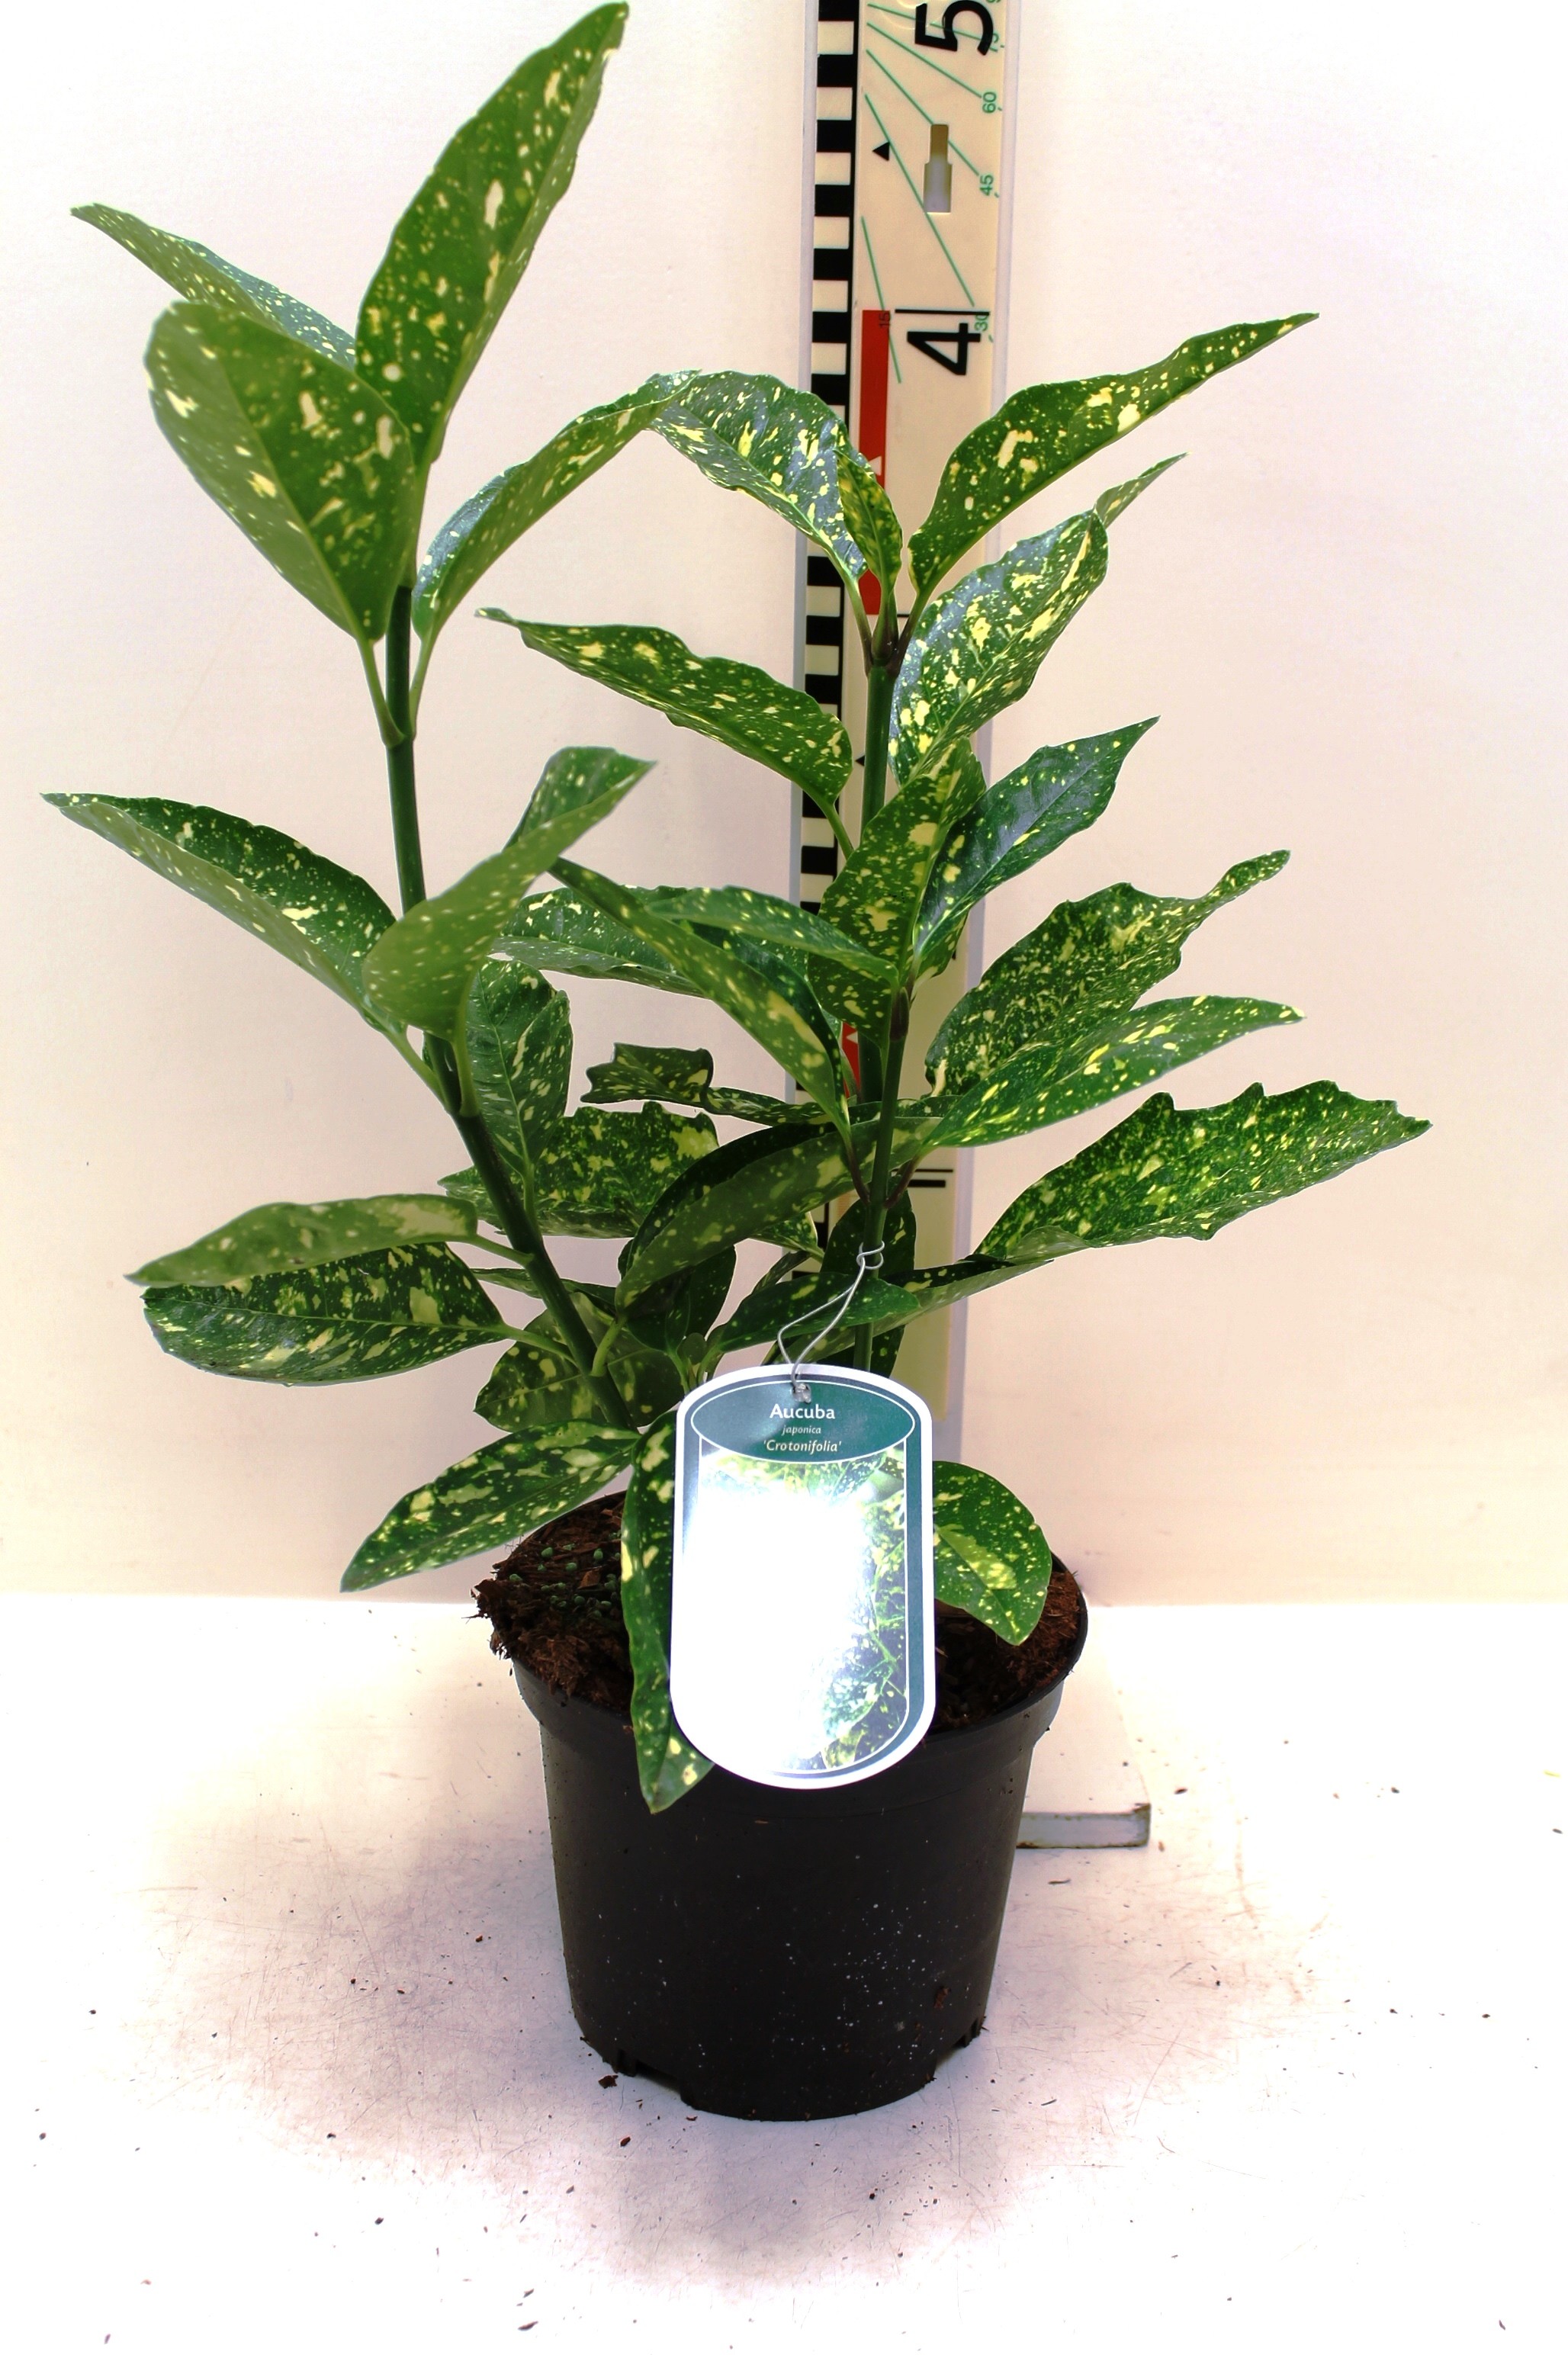 Aucuba jap. Crotonifolia c3